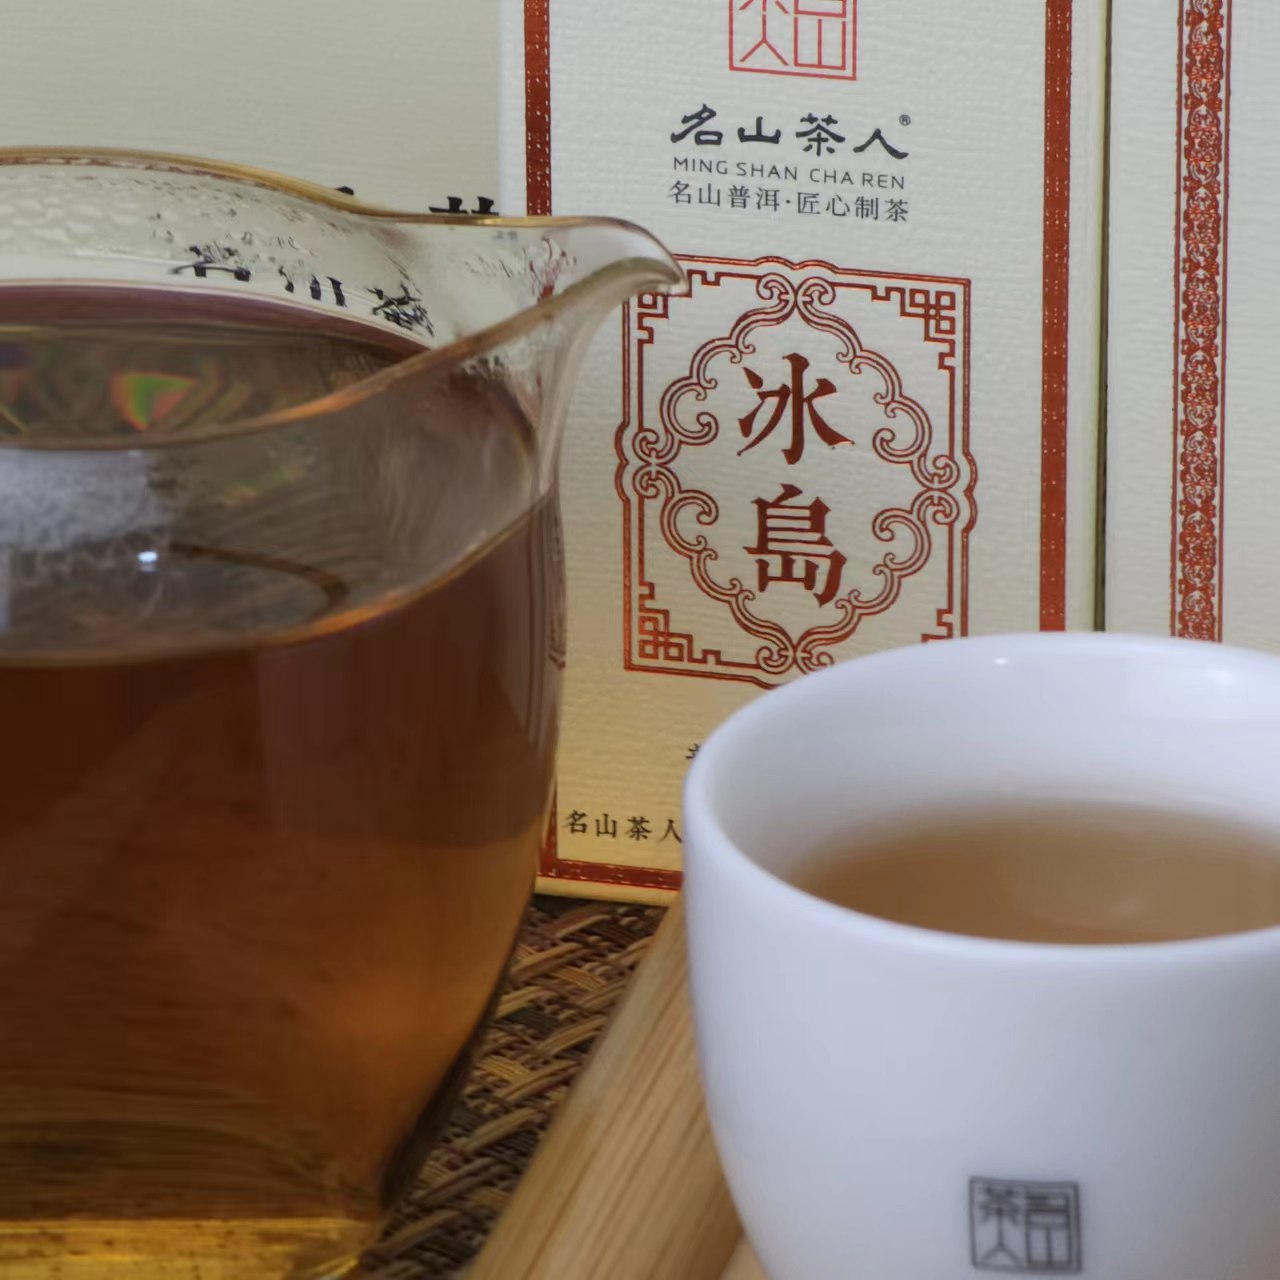 Lcelandic Tea china